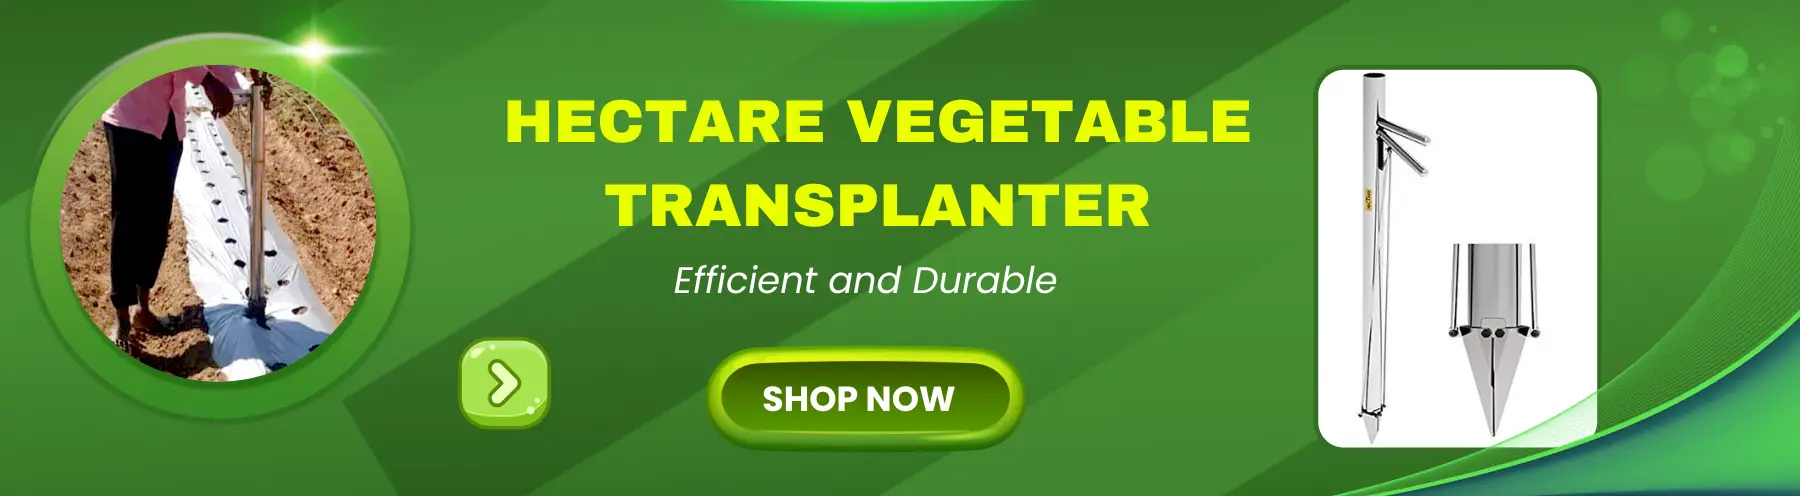 Hectare Vegetable Transplanter